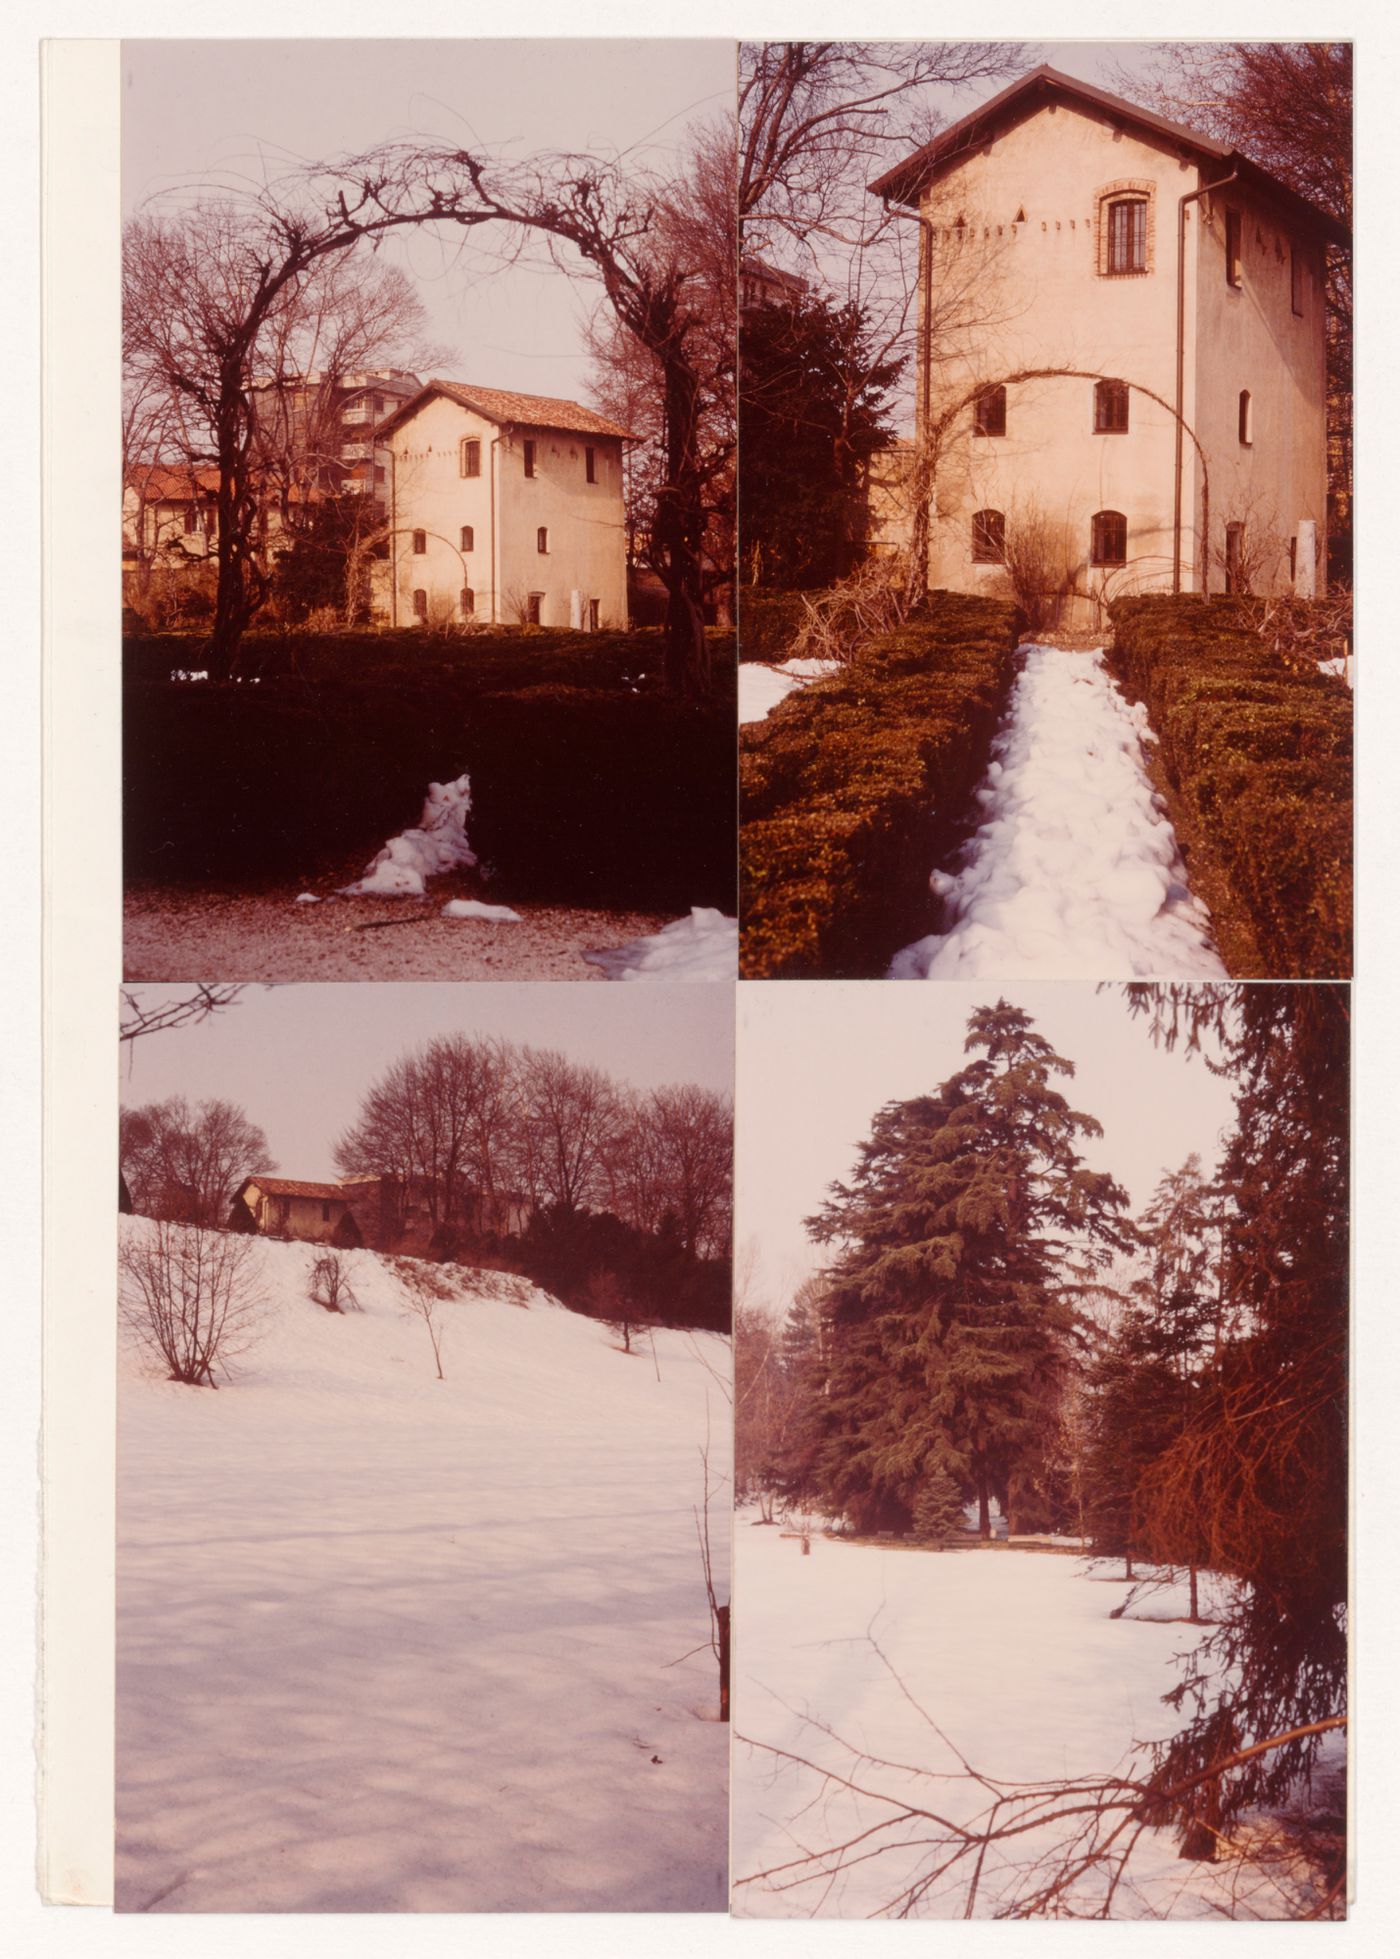 Views of Villa Cusani Confalonieri, Carate Brianza, Italy, as part of Aldo Rossi's project file "Progetto Pilota 1984", a proposal for the restauration of the villa